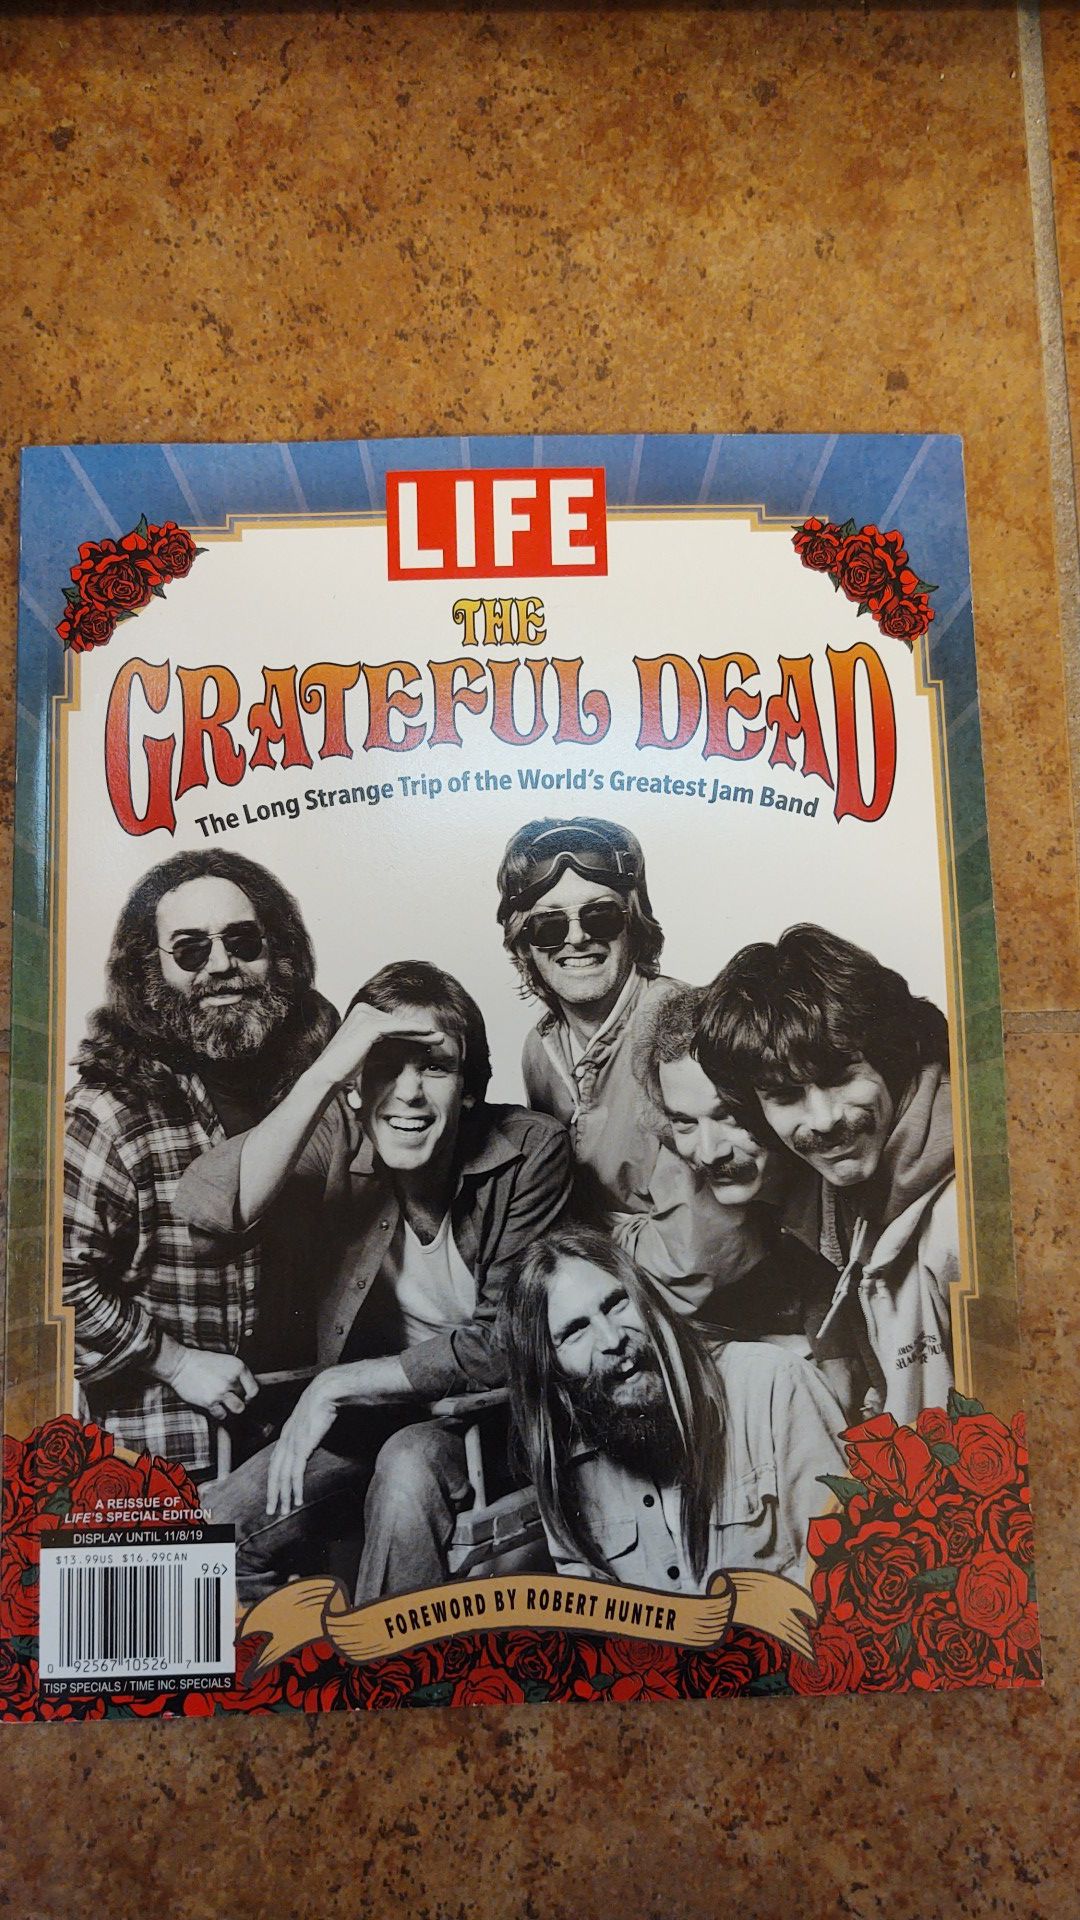 Life Magazine "The Grateful Dead"